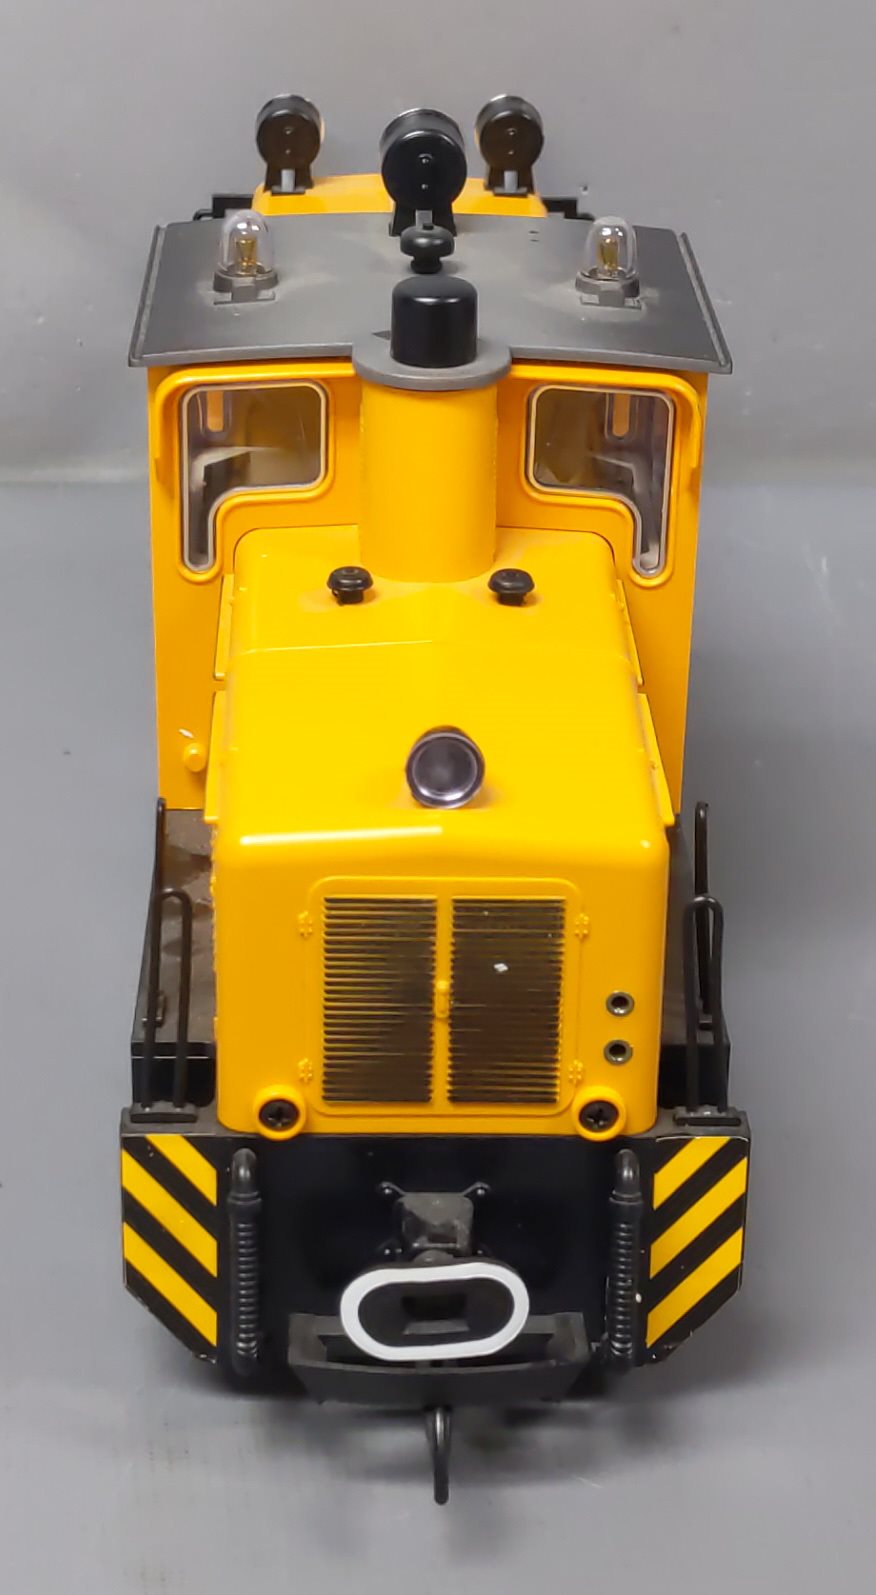 LGB 20670 G Track Cleaning Diesel Locomotive EX/Box